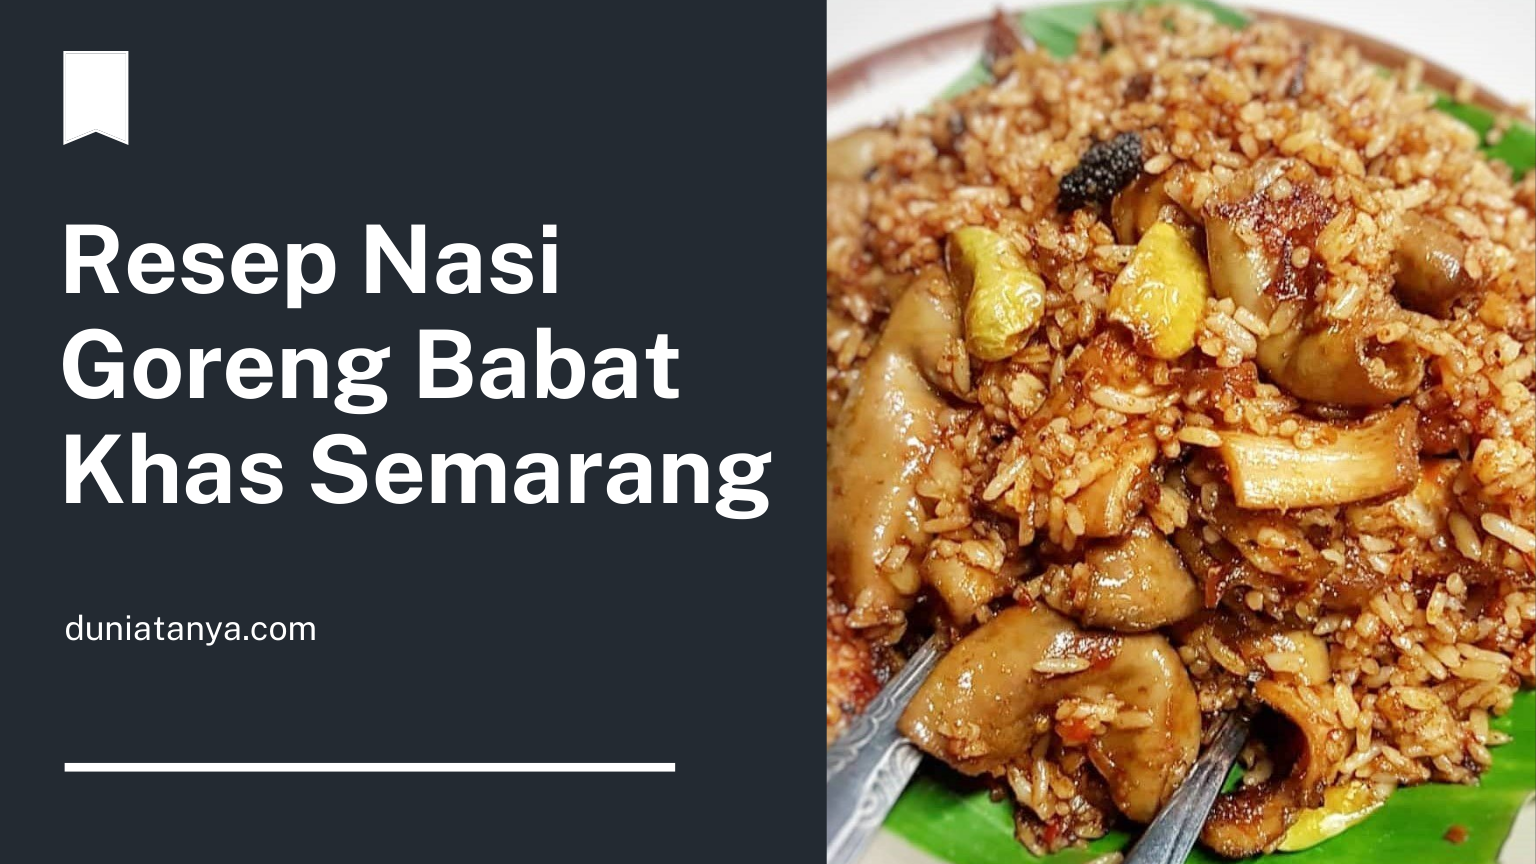 You are currently viewing Resep Nasi Goreng Babat Khas Semarang